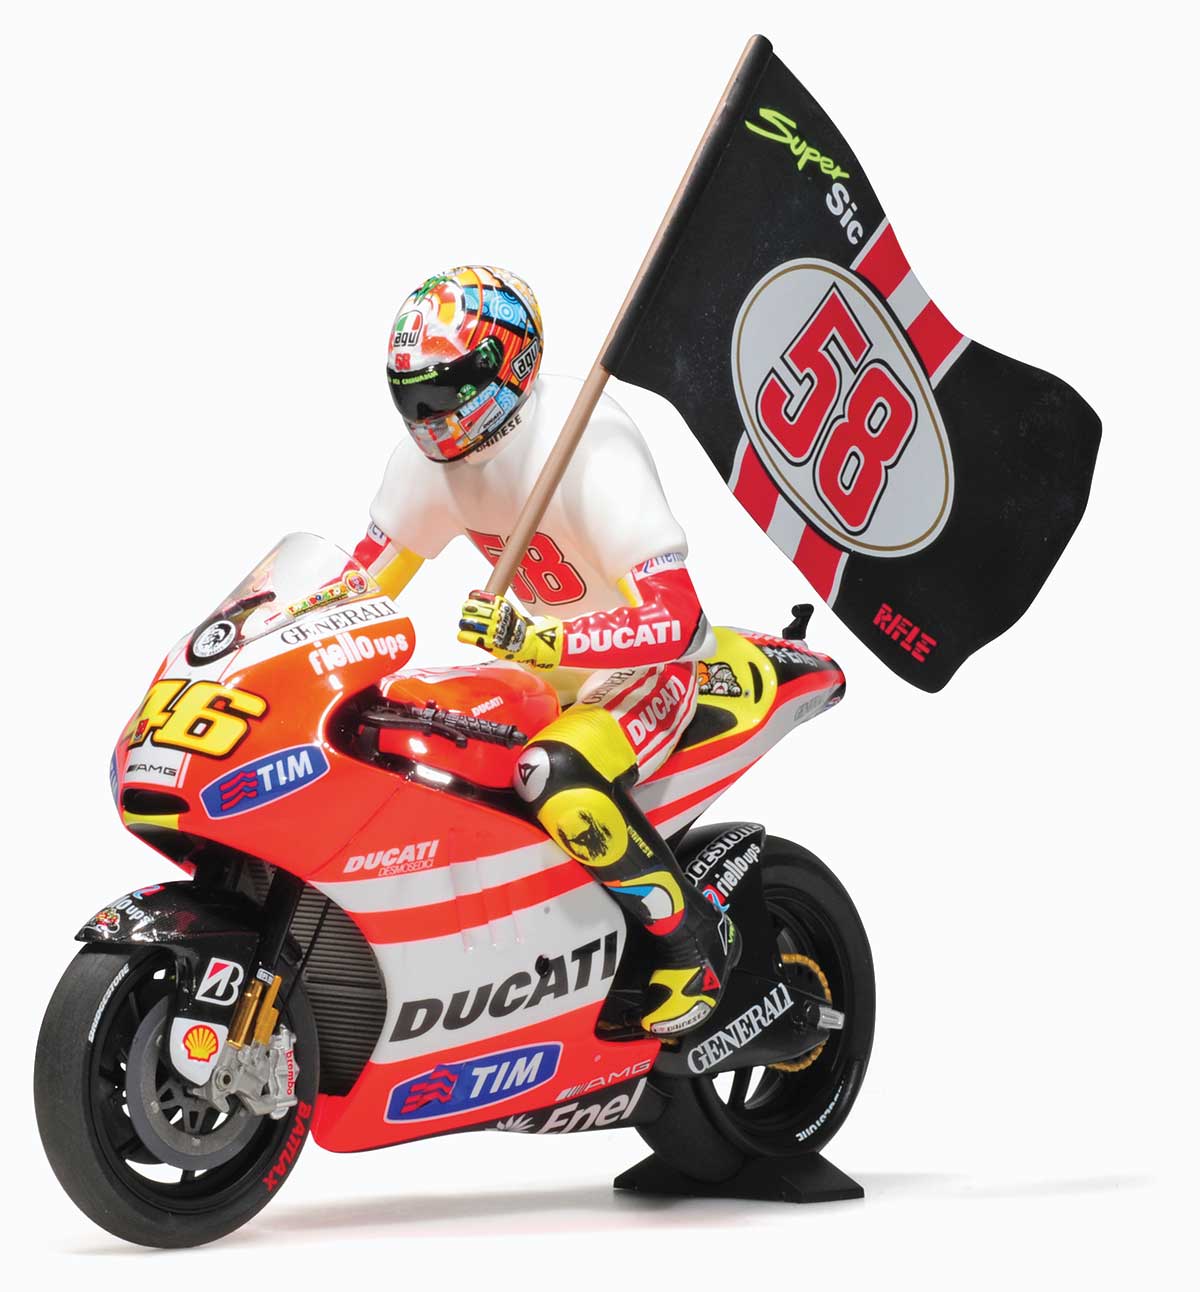 Ducati v.rossi 2011 1:12 moto scala new ray 